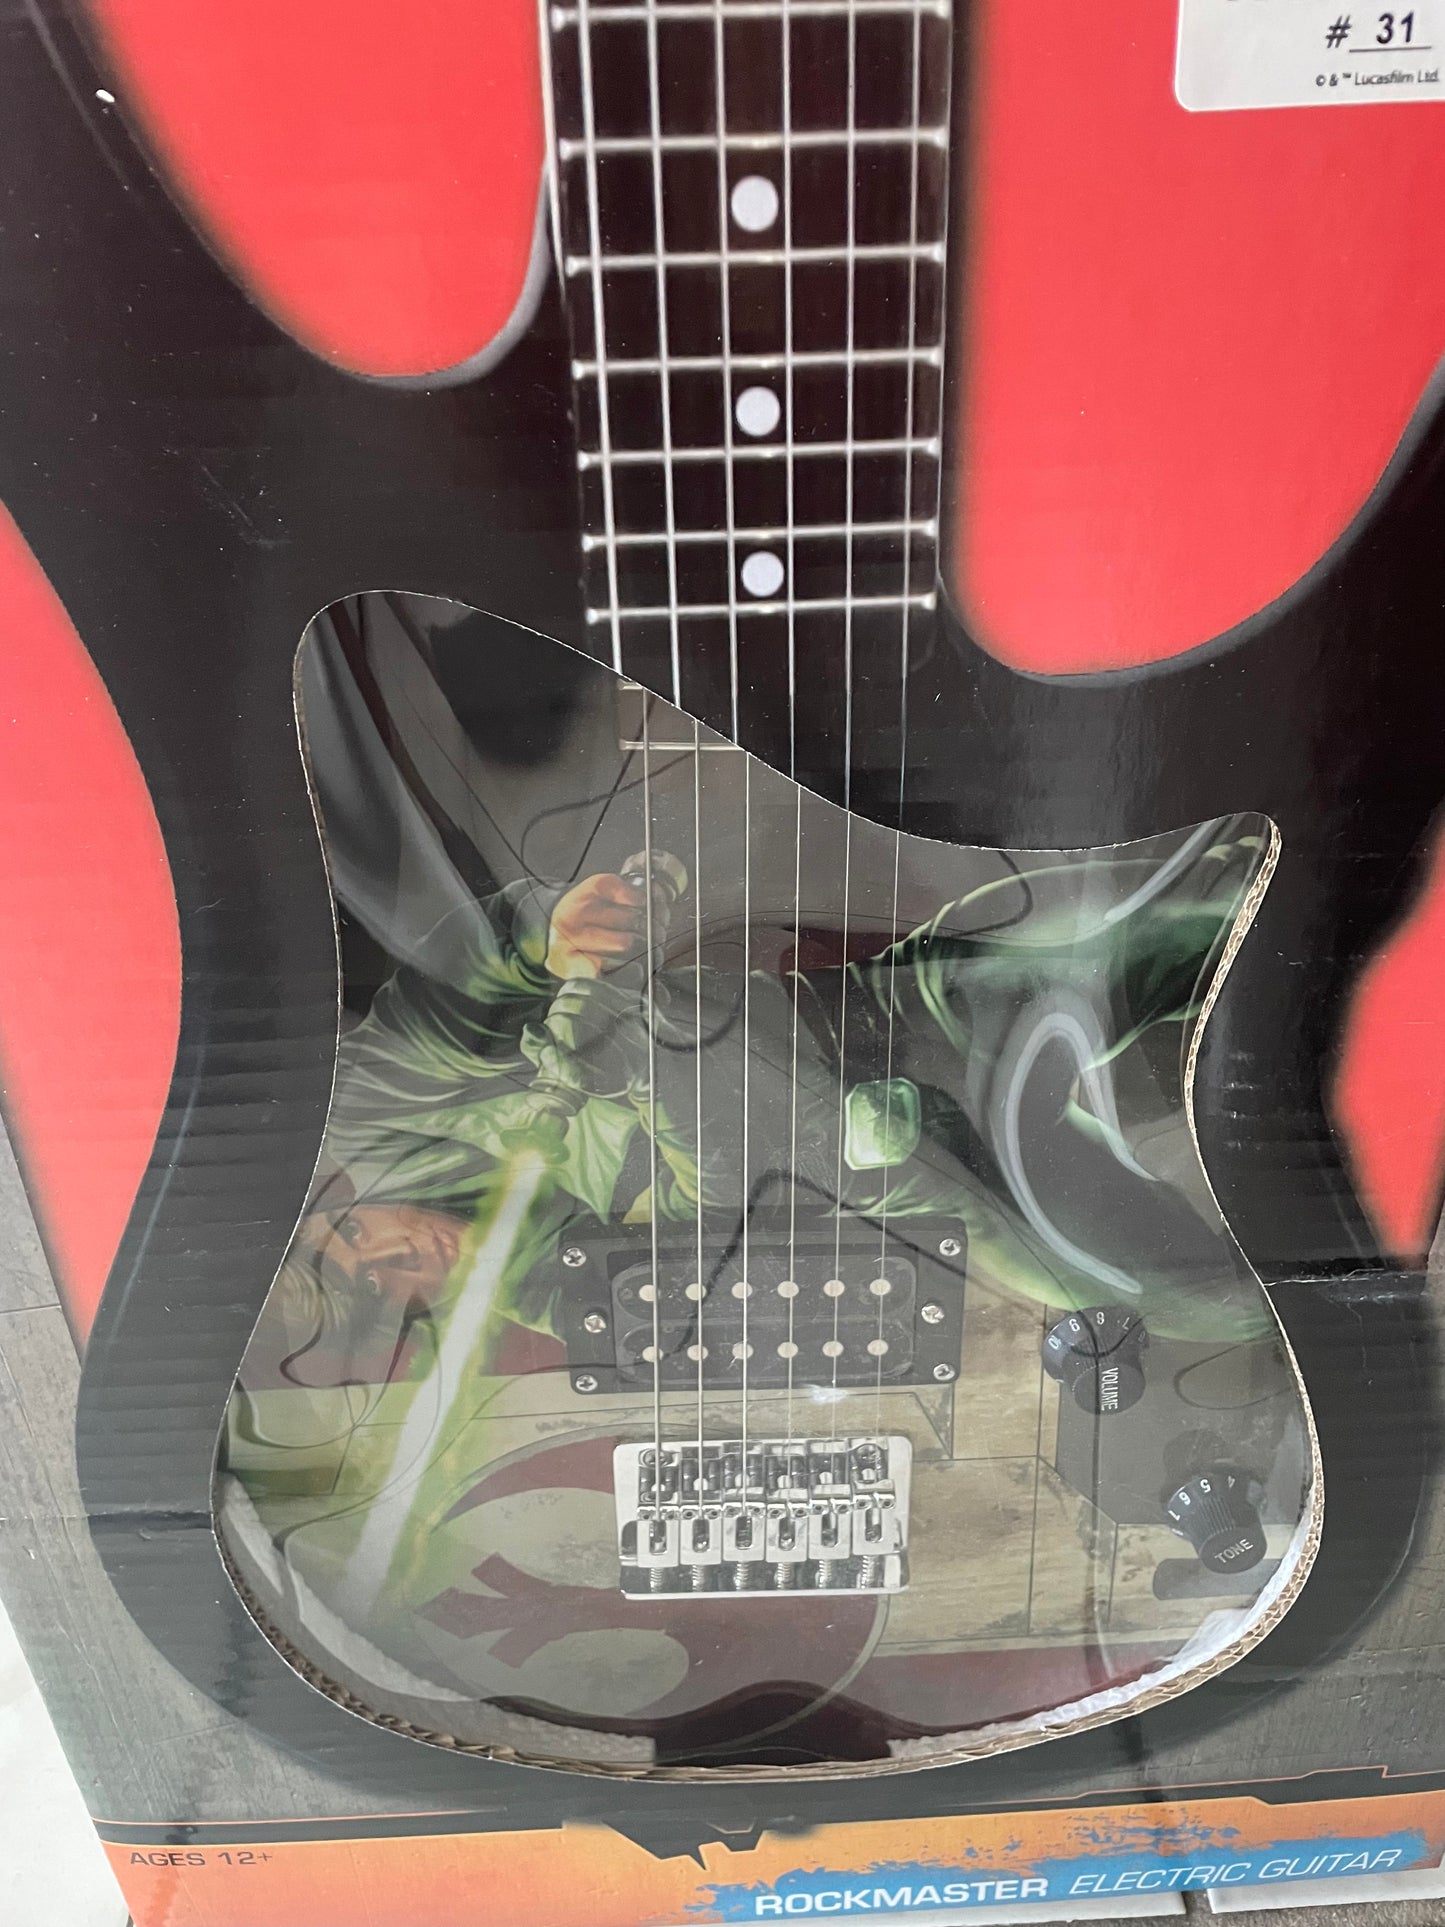 SDCC 2014 Exclusive Star Wars Lightside Peavey Guitar (31 of50)